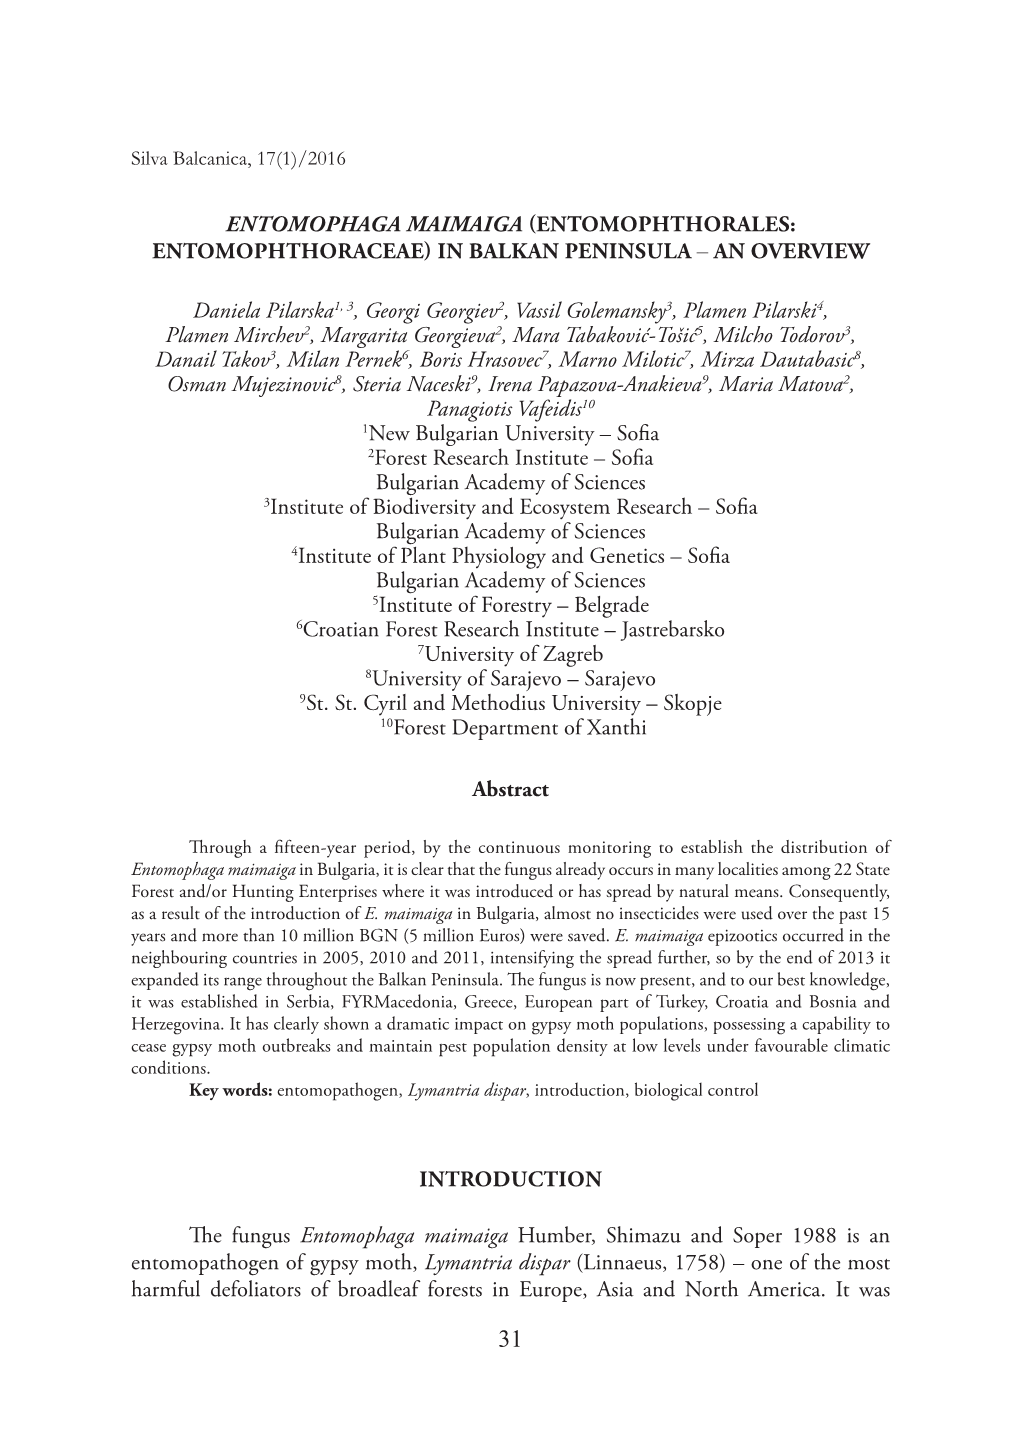 Entomophaga Maimaiga (Entomophthorales: Entomophthoraceae) in Balkan Peninsula – an Overview